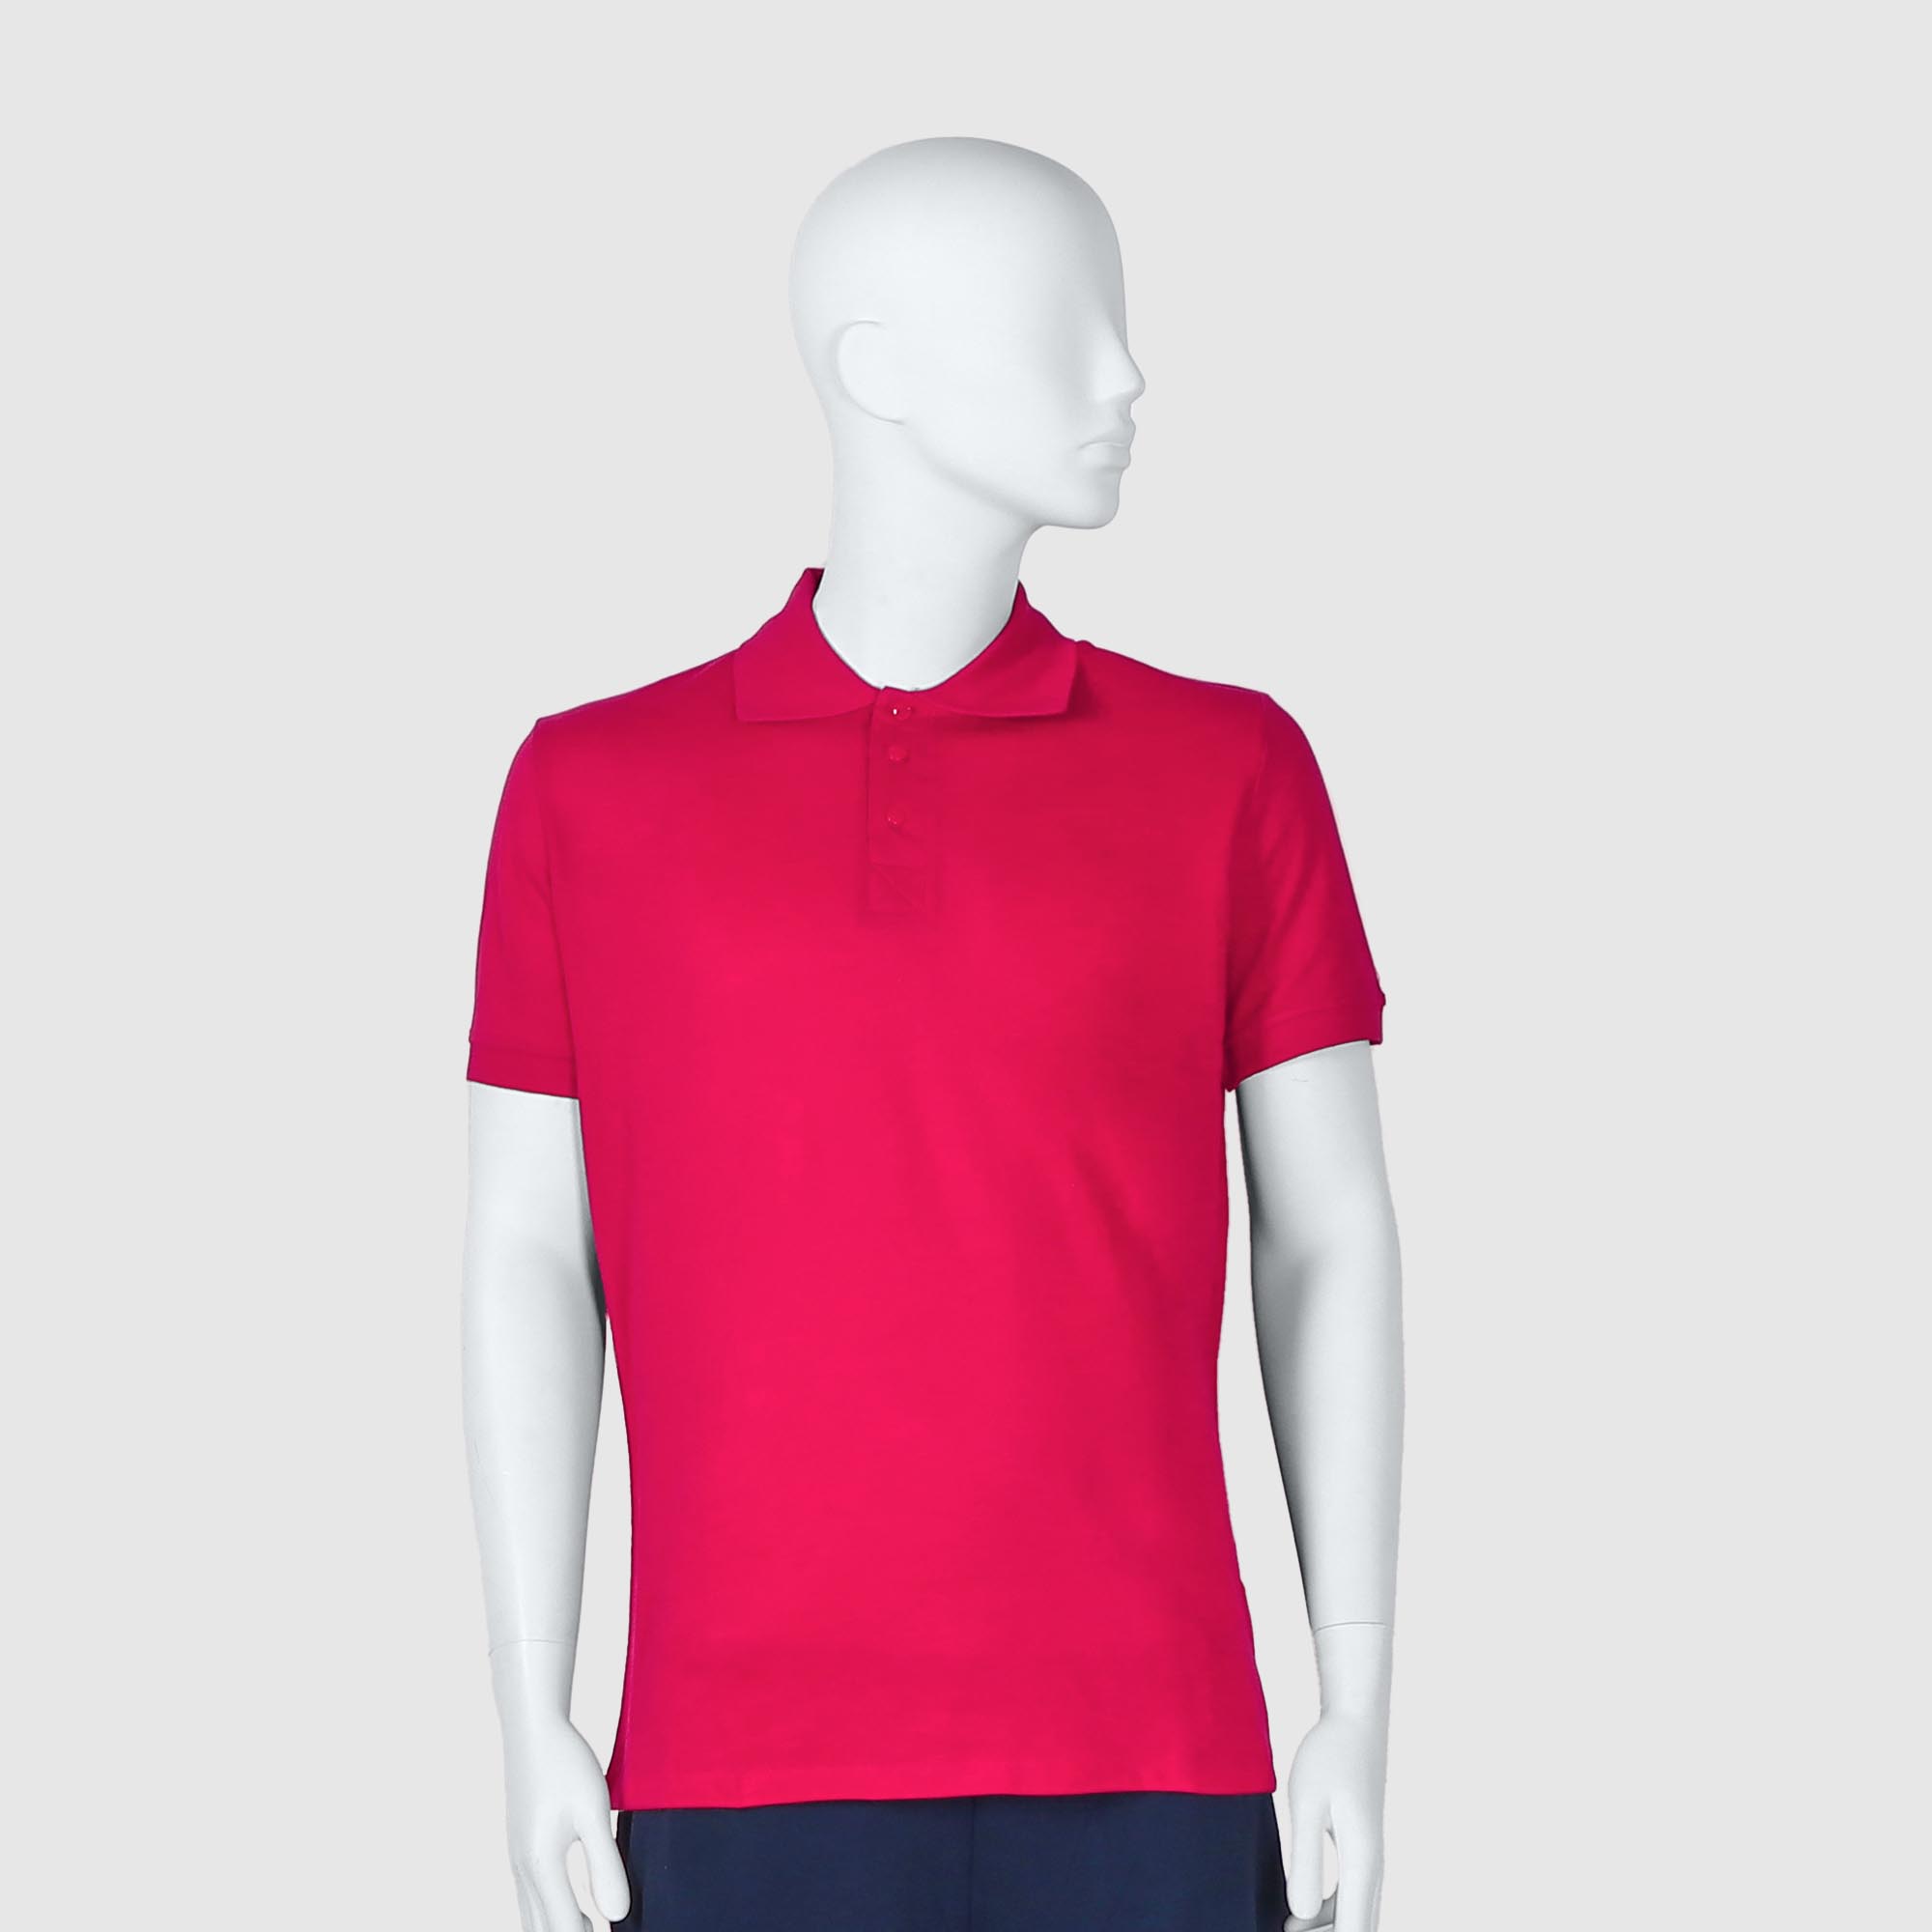 Мужская футболка-поло Diva Teks красная (DTD-08), цвет красный, размер 50-52